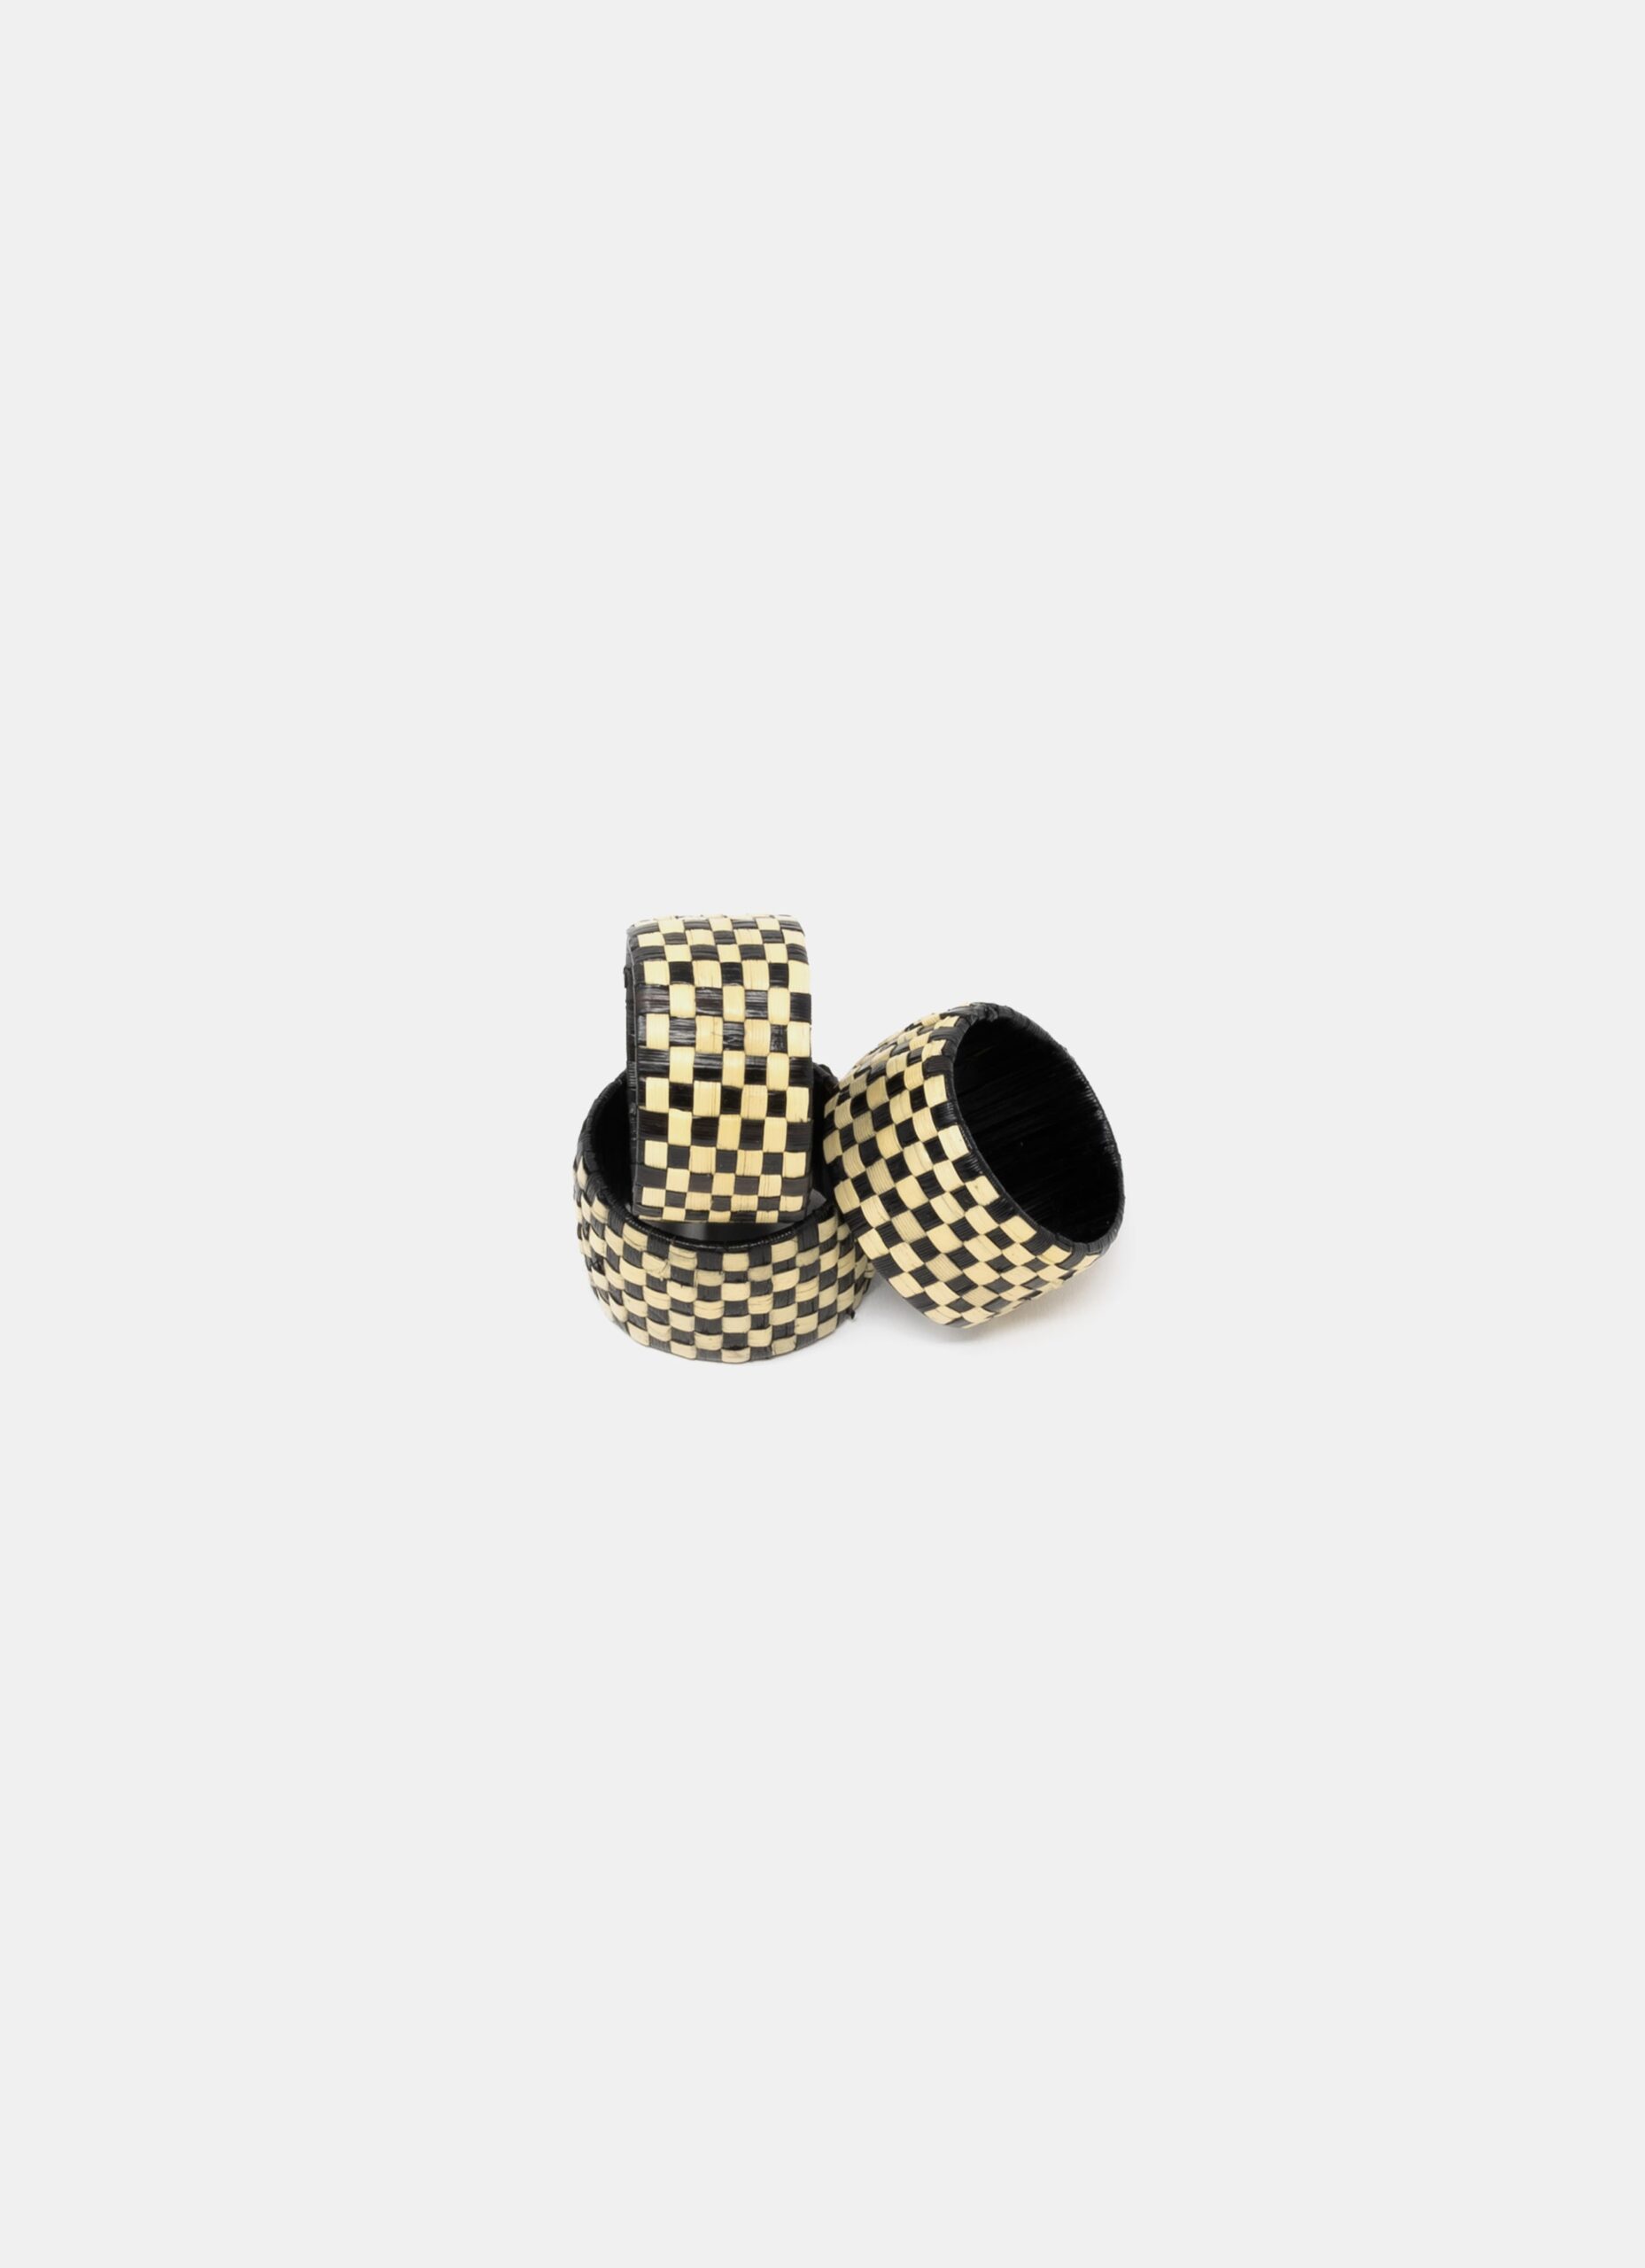 Afro Art - Checkerboard - Napkin holder